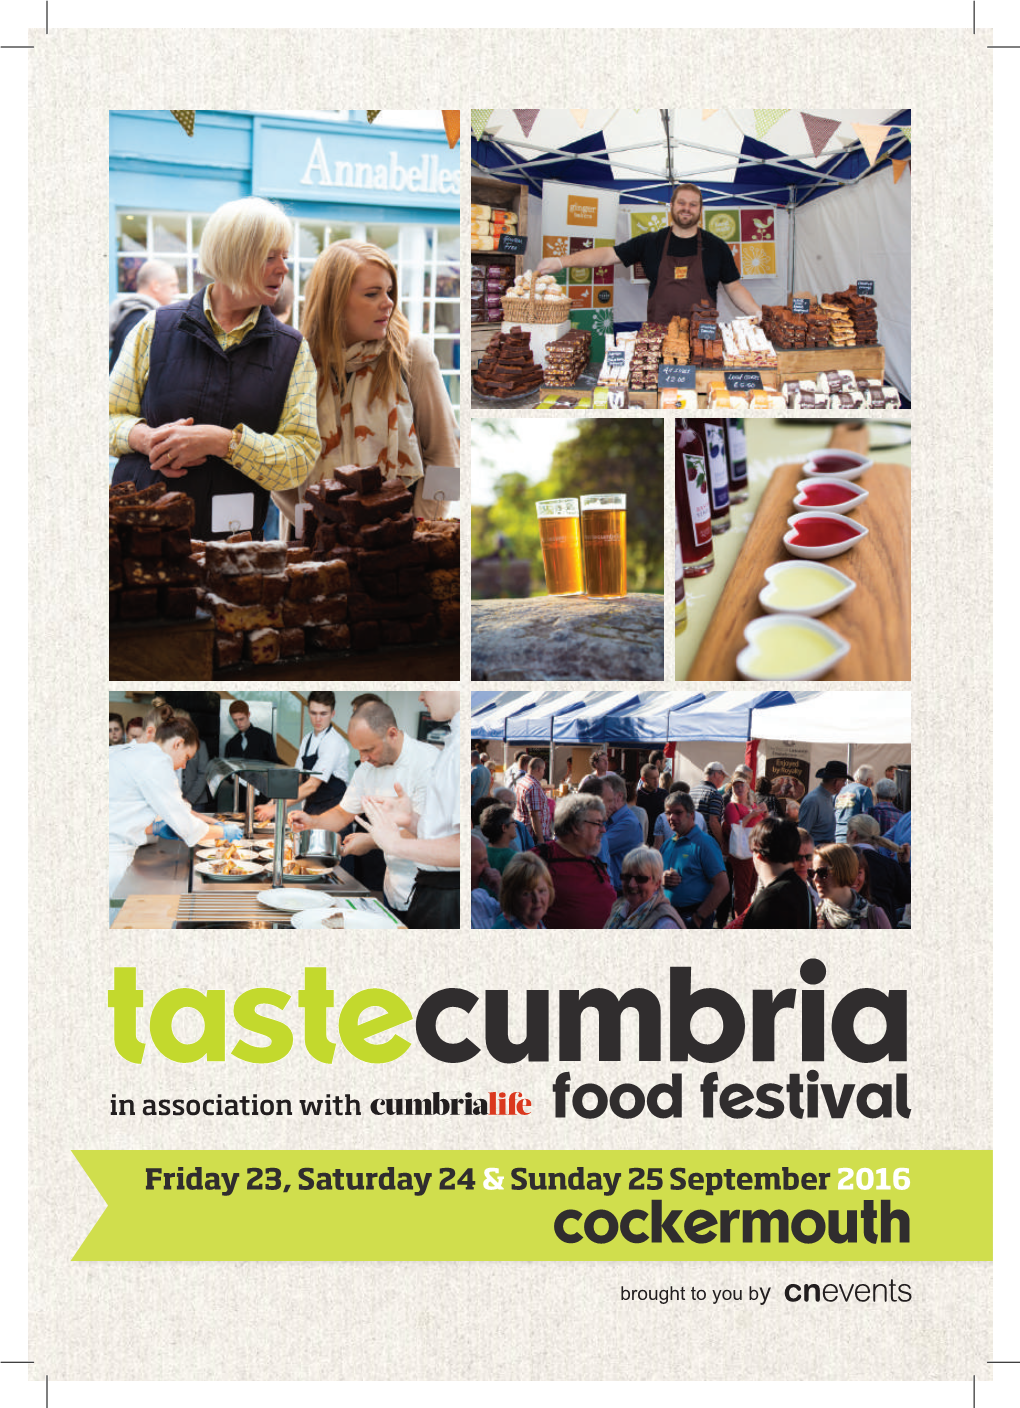 Tastecumbria in Association with Food Festival